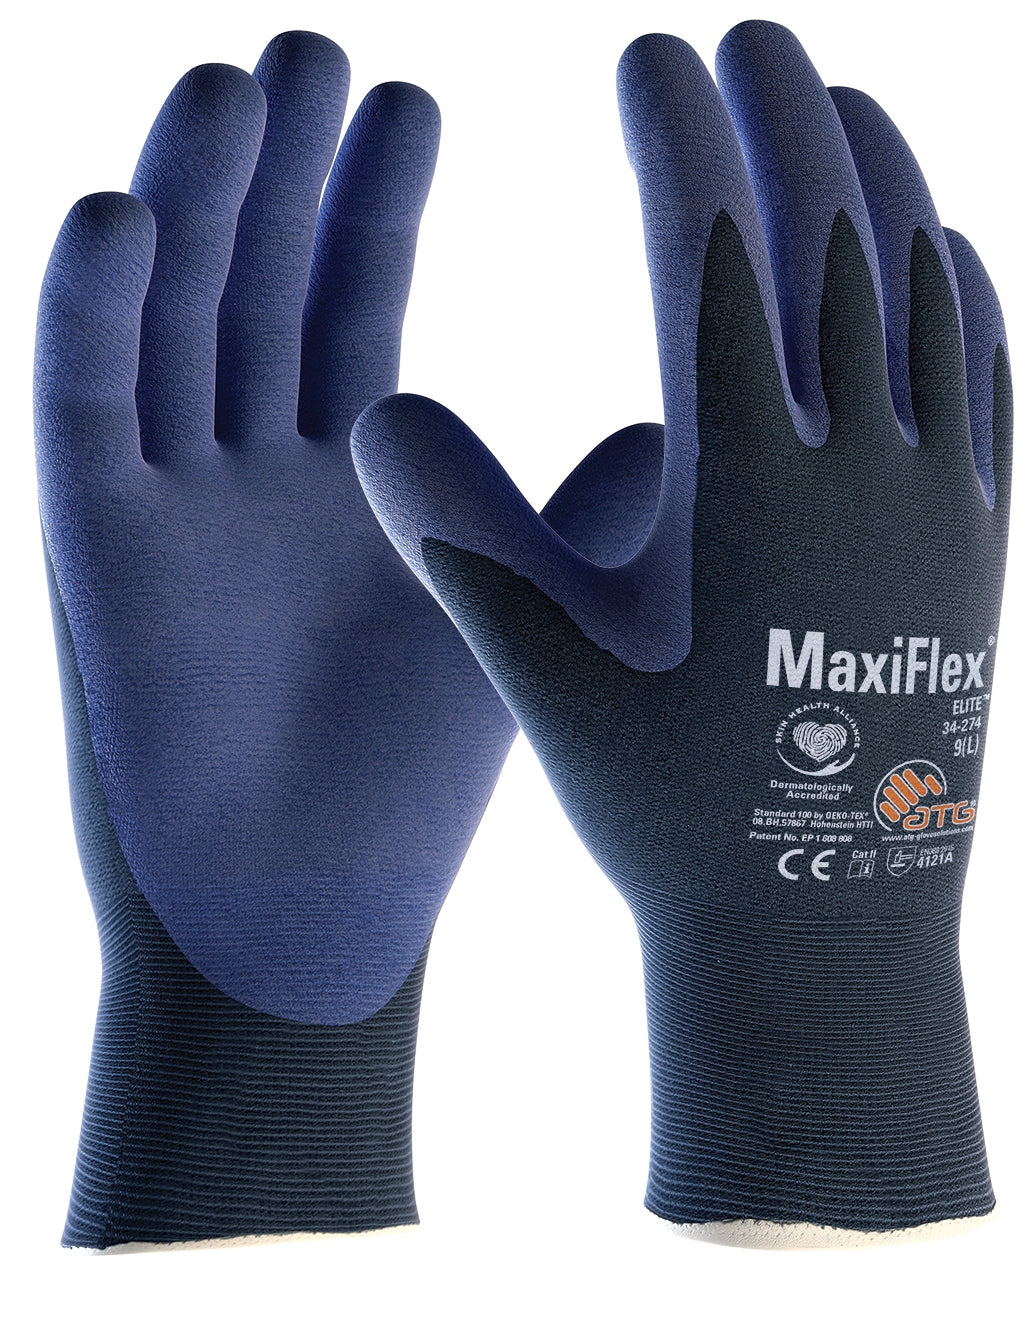 MaxiFlex® Elite™ Nylon-Strickhandschuhe (34-274)-arbeitskleidung-gmbh